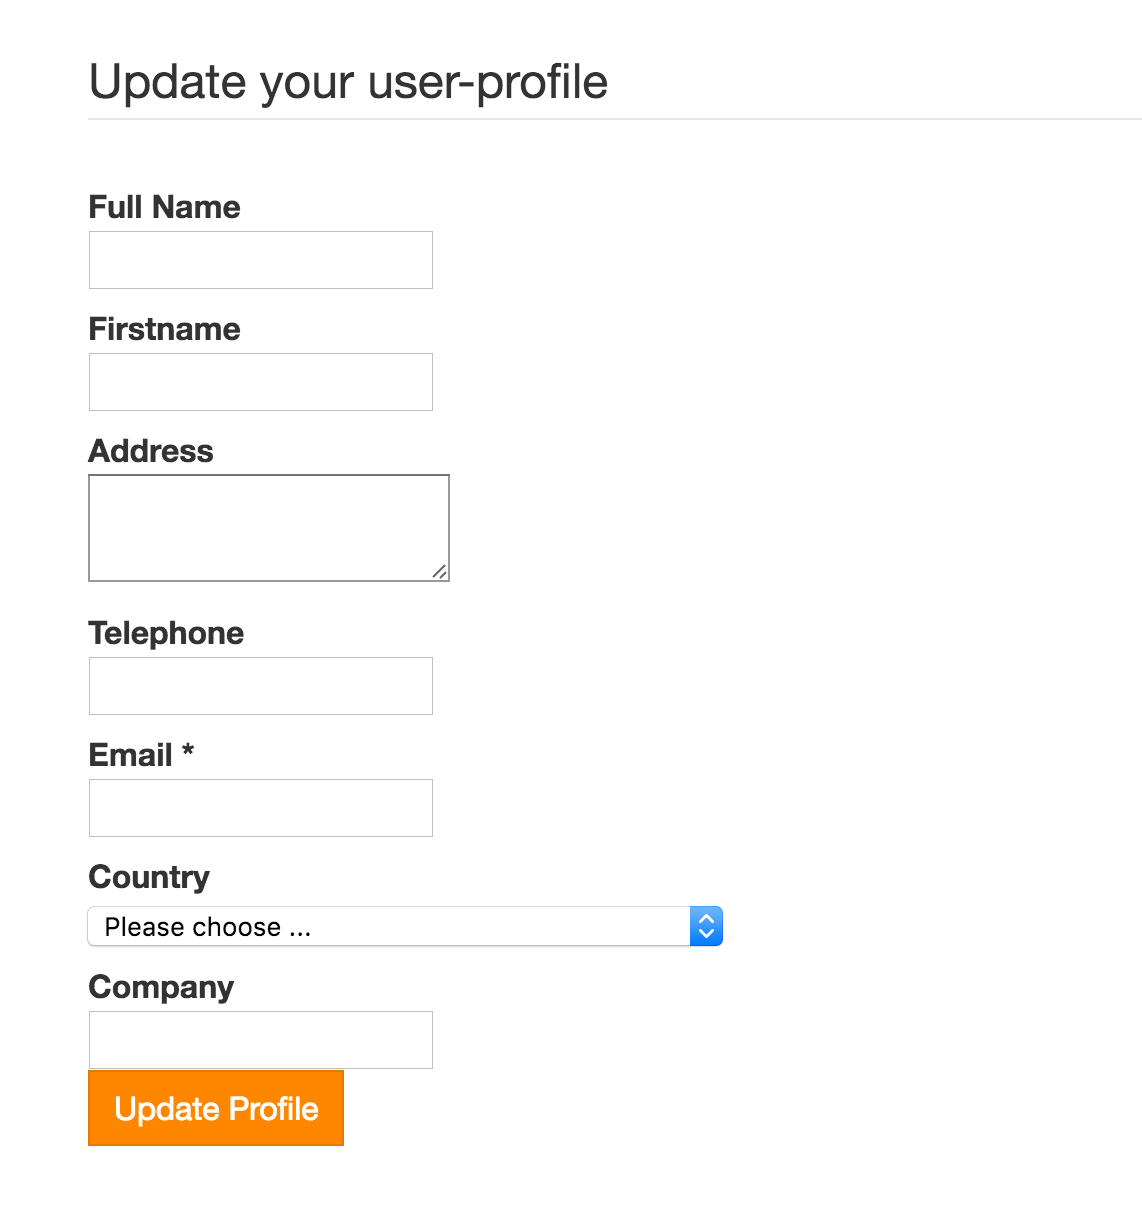 Update Userdata Form